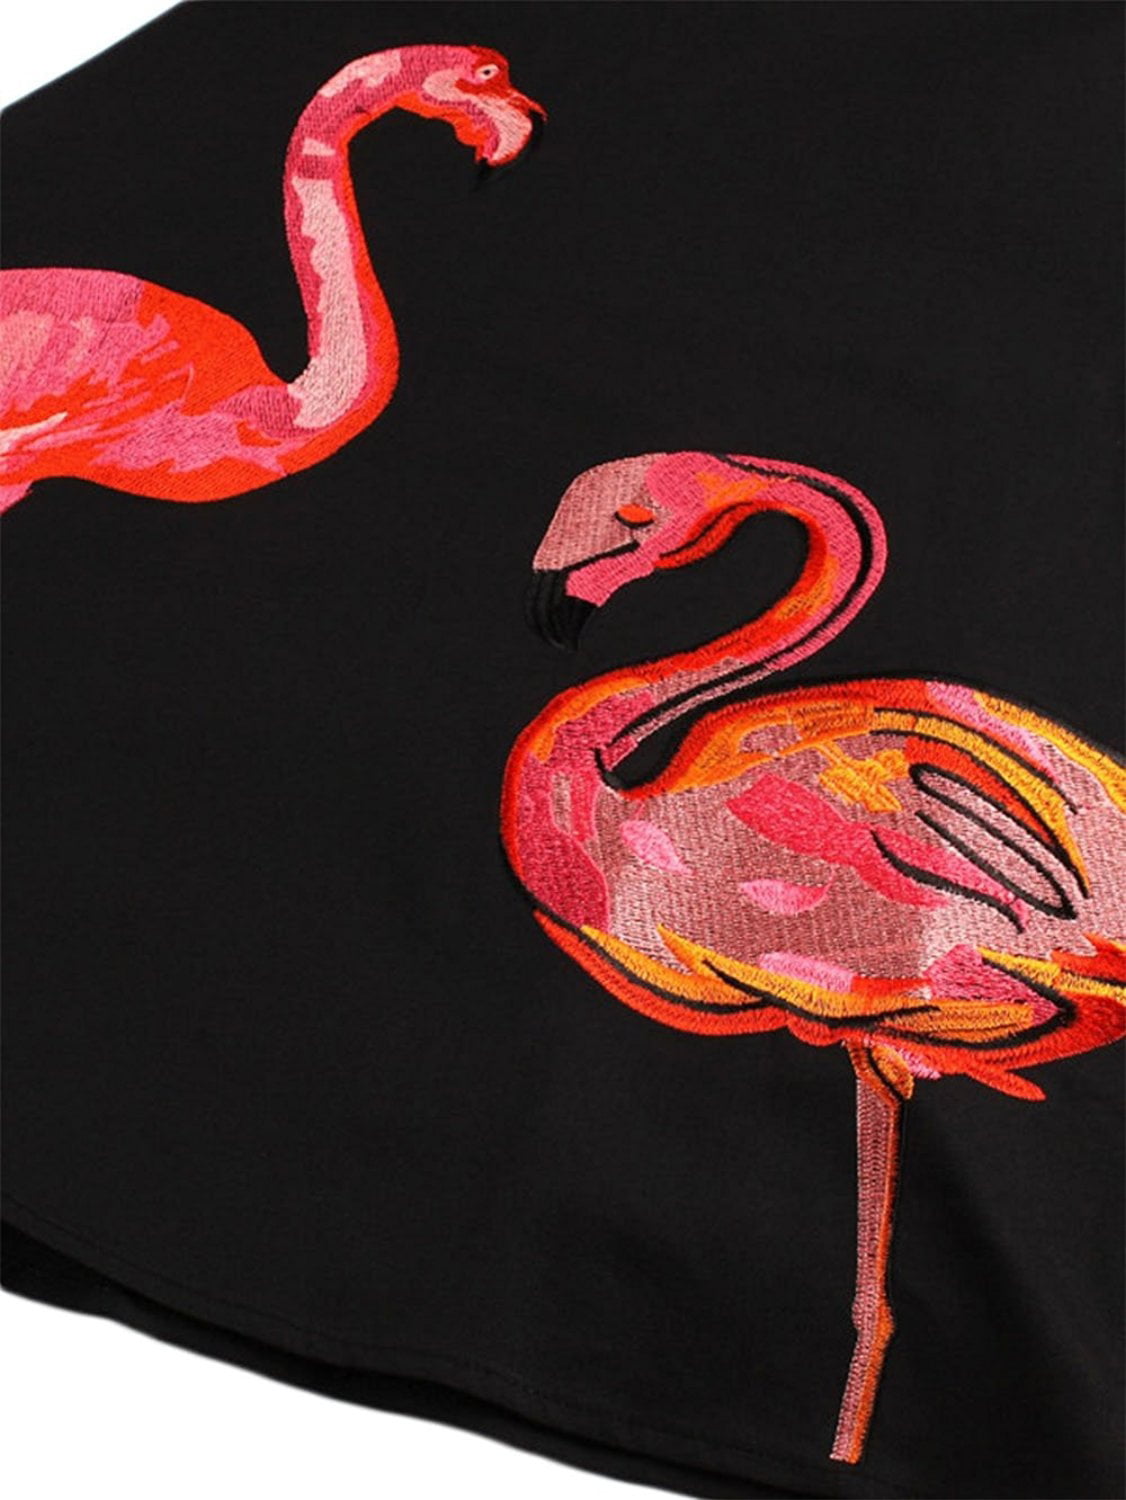 Retro Flamingo Print Shirt by Run and Fly S/M/L/XL/XXL Rockabilly Fifties 50s St